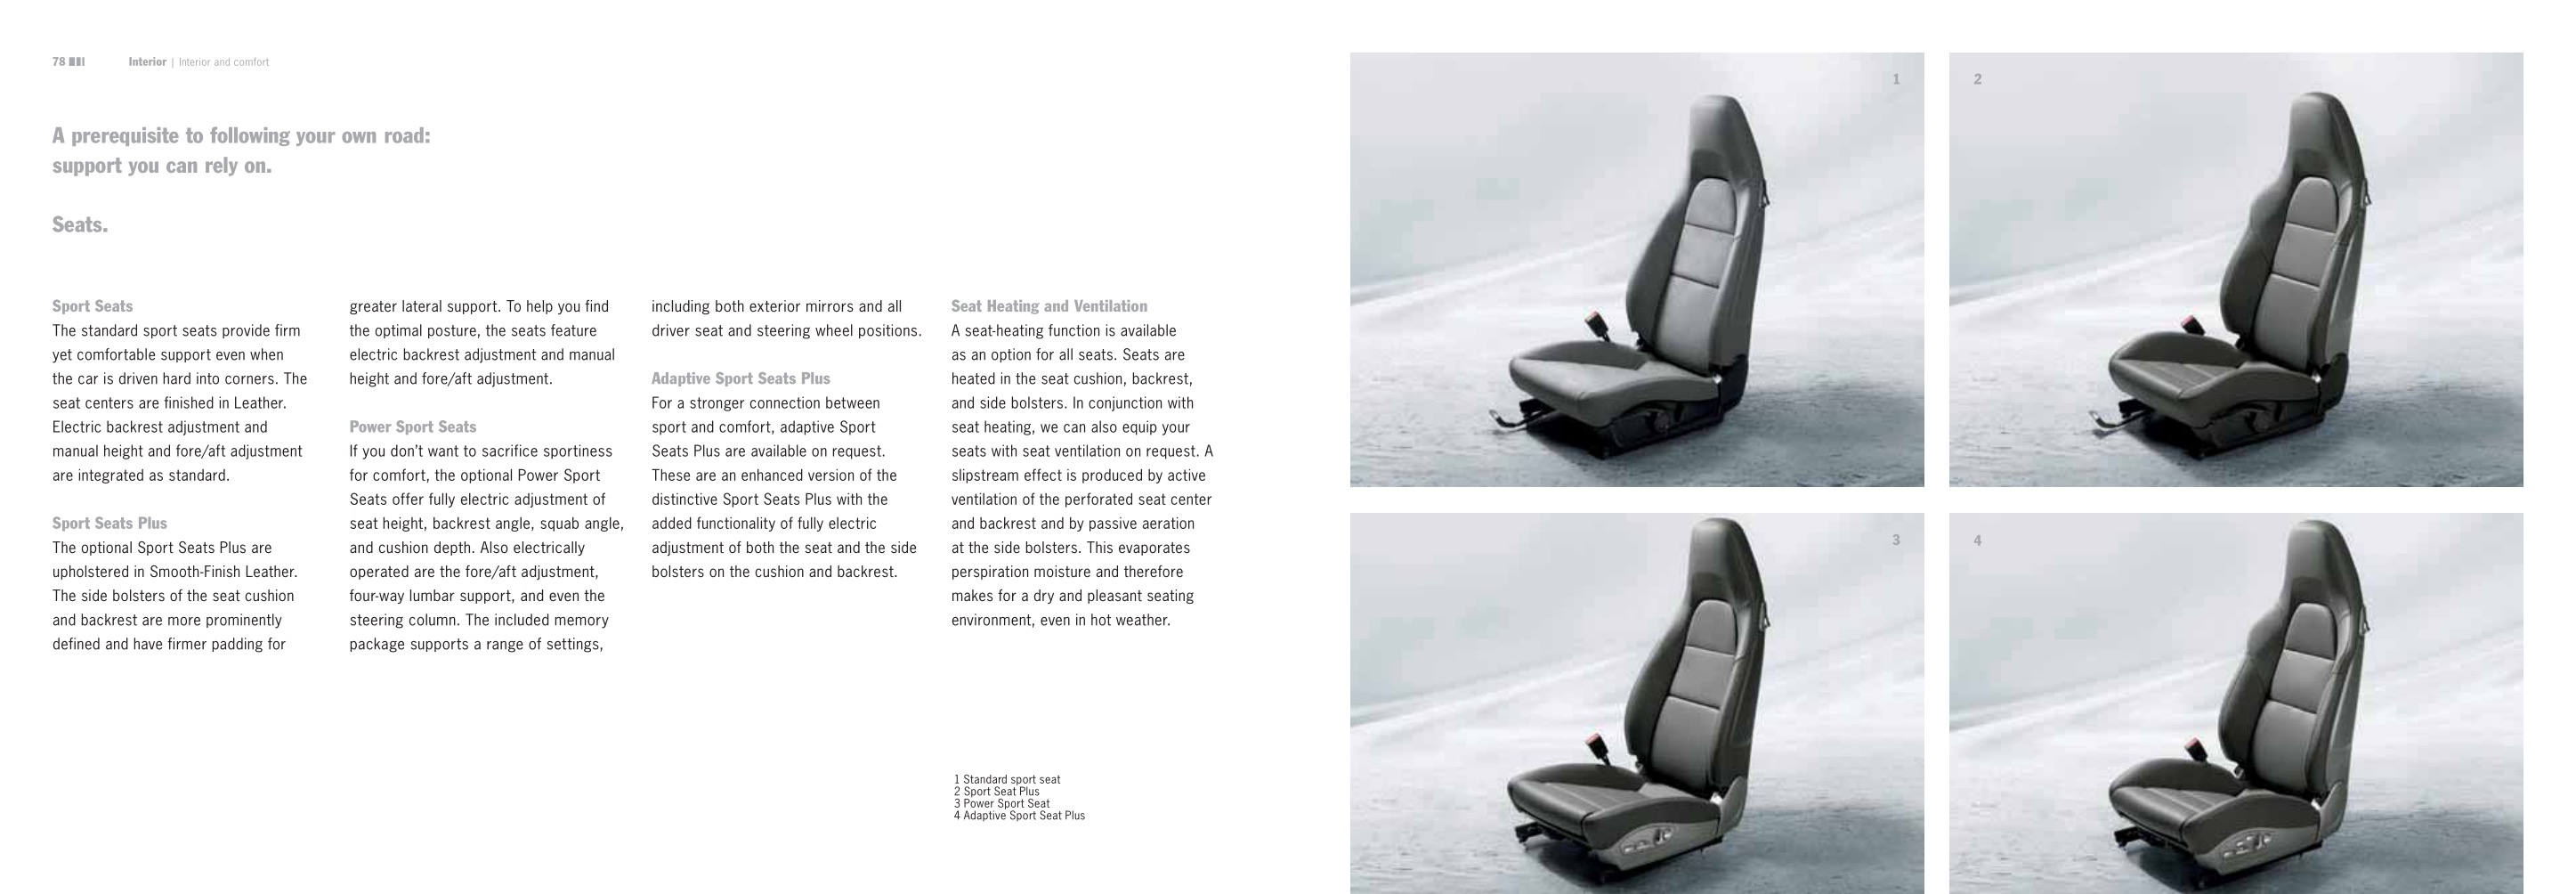 2014 Porsche Cayman Brochure Page 56